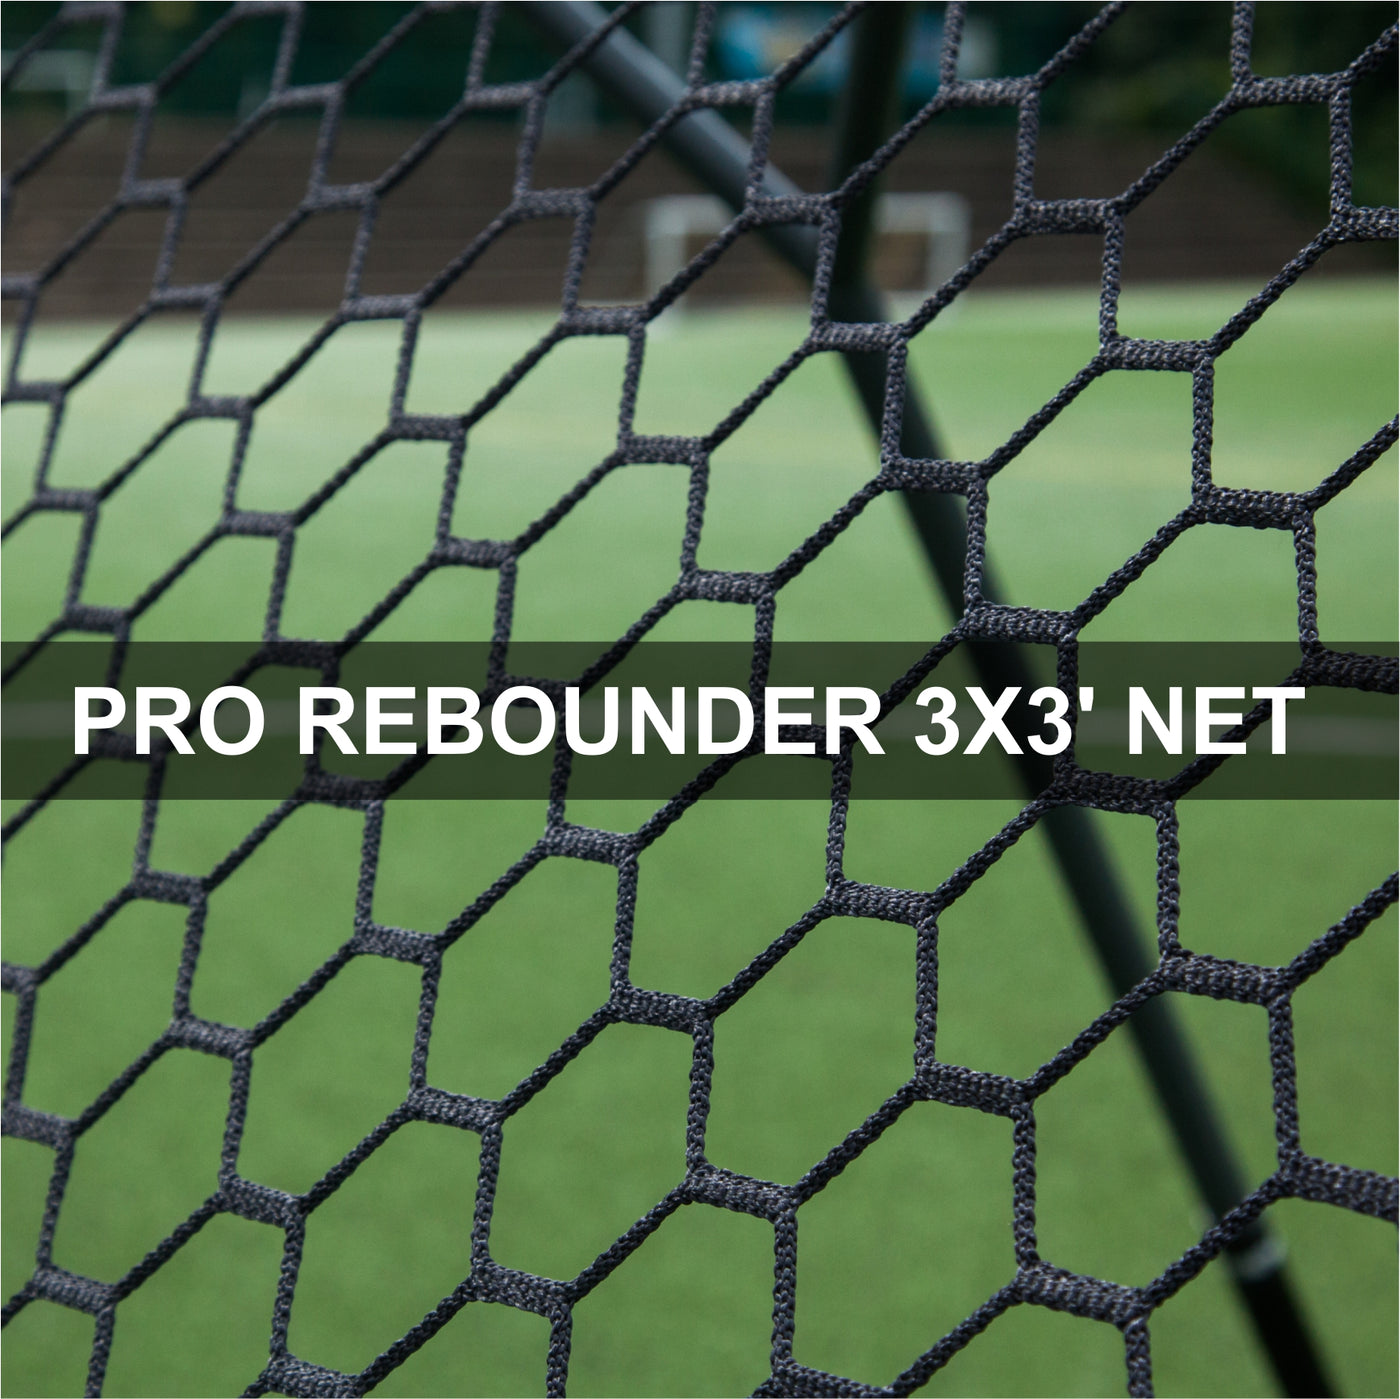 SPARE PART - NET - Pro Rebounder 3x3' Net